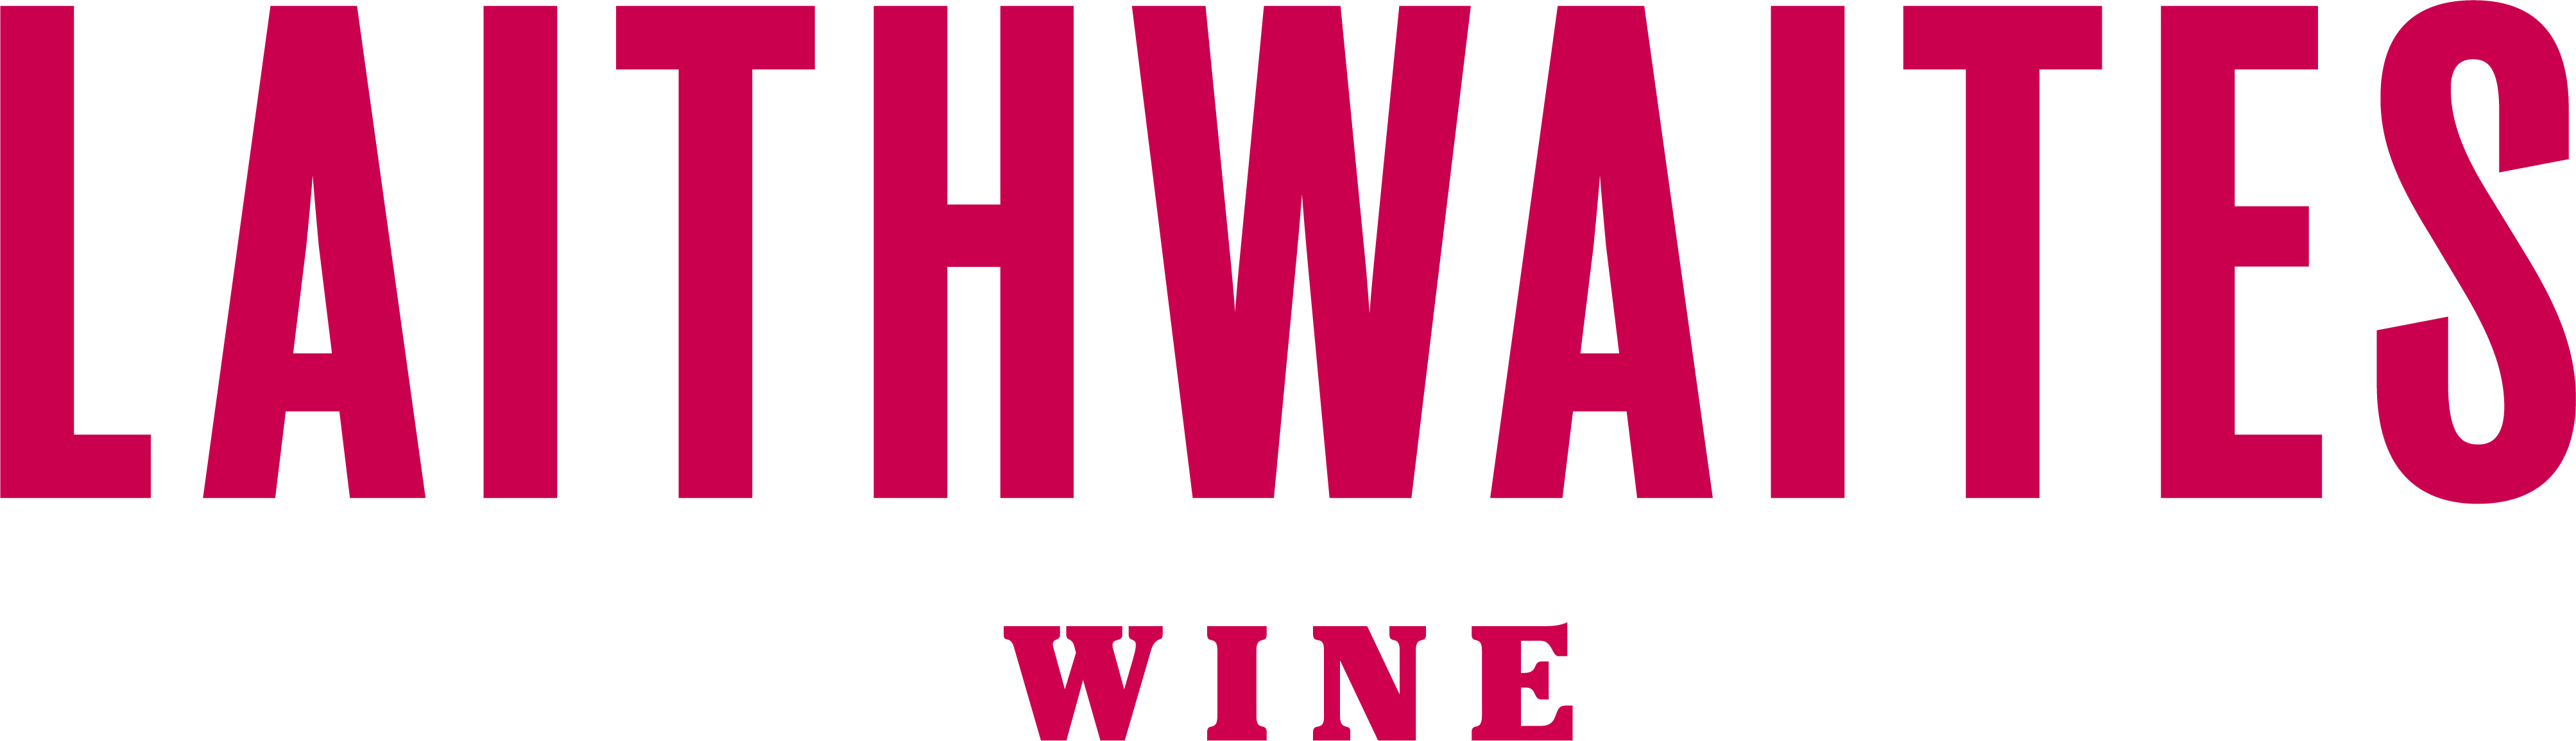 Laithwaite Wines